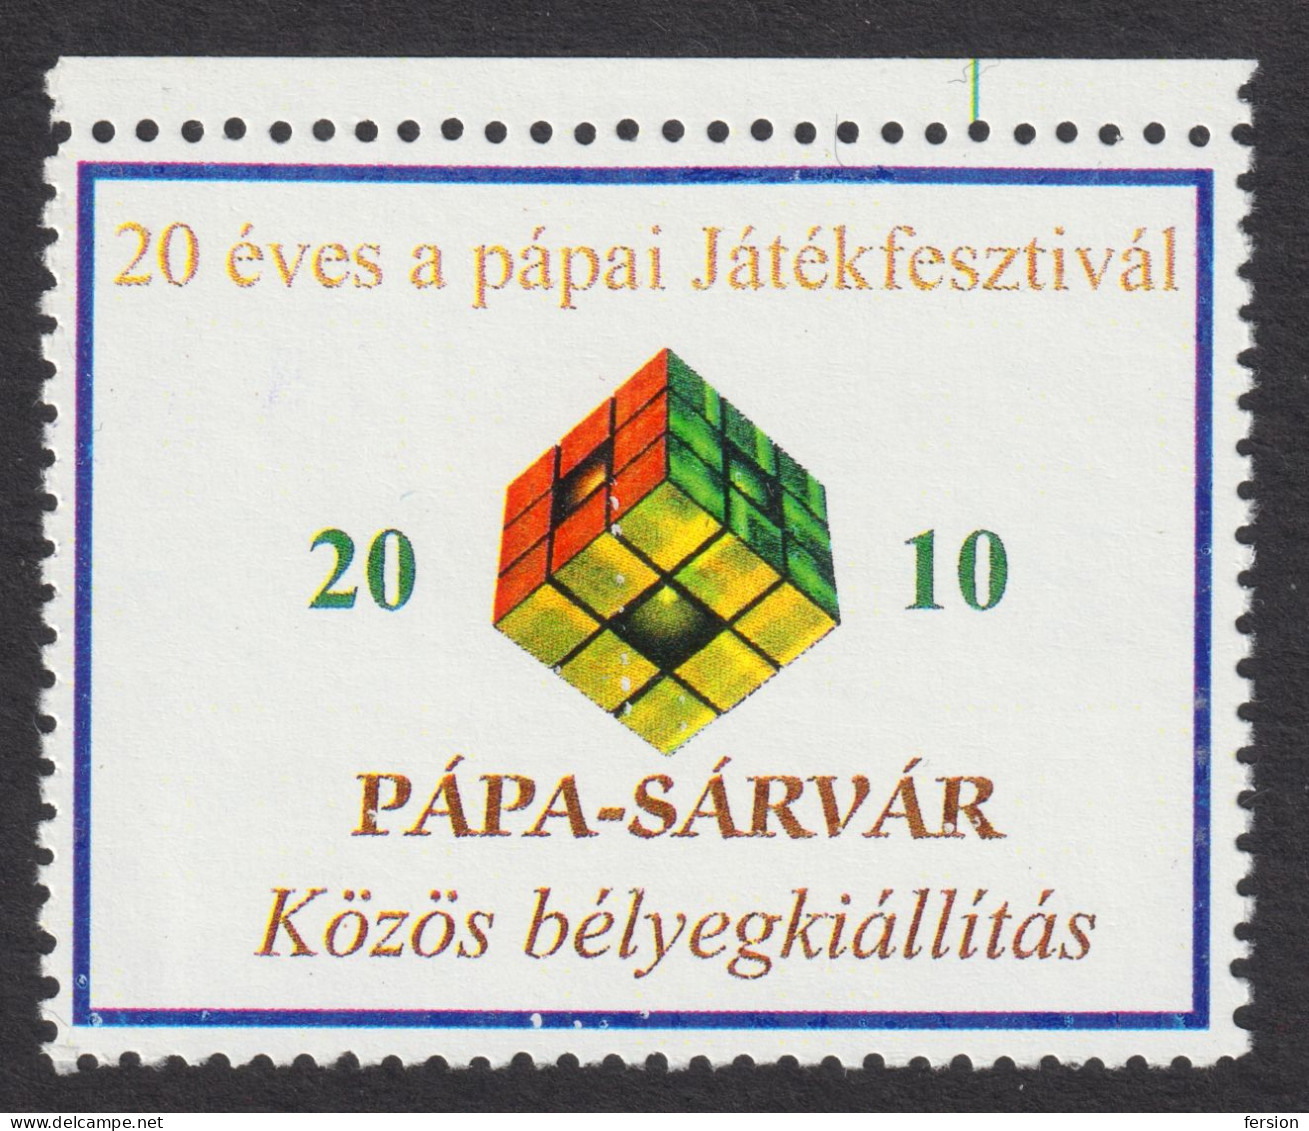 Rubik's Rubik Magic Cube TOY PLAY - Pápa / Sárvár Game Festival - LABEL CINDERELLA VIGNETTE Hungary - Non Classés